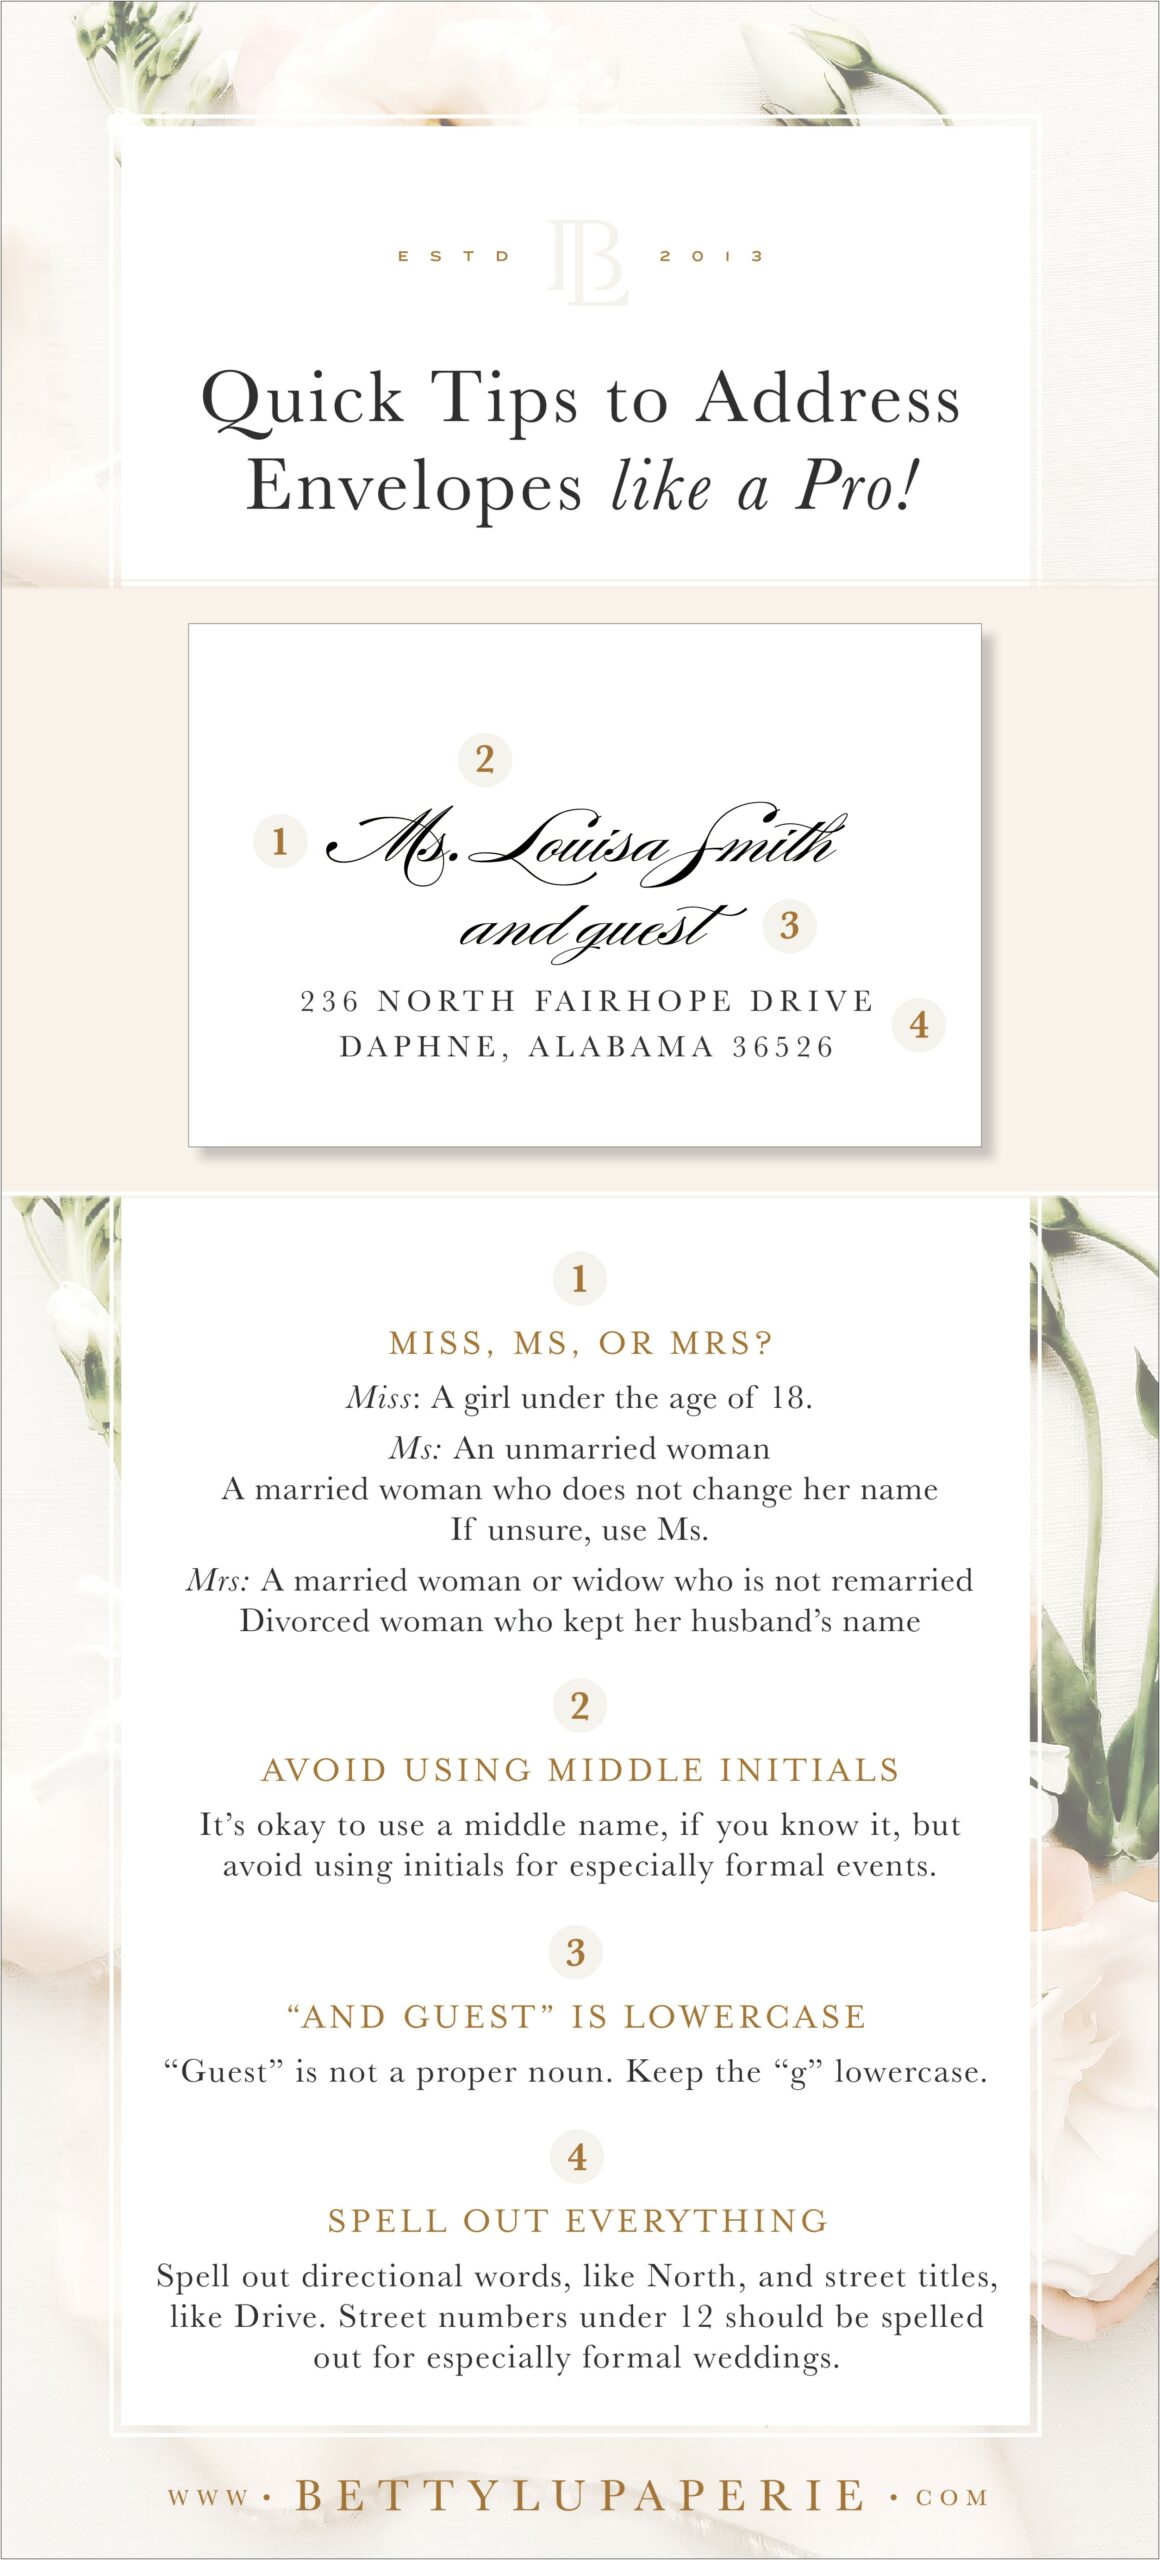 Best Ways To Address Wedding Invitations